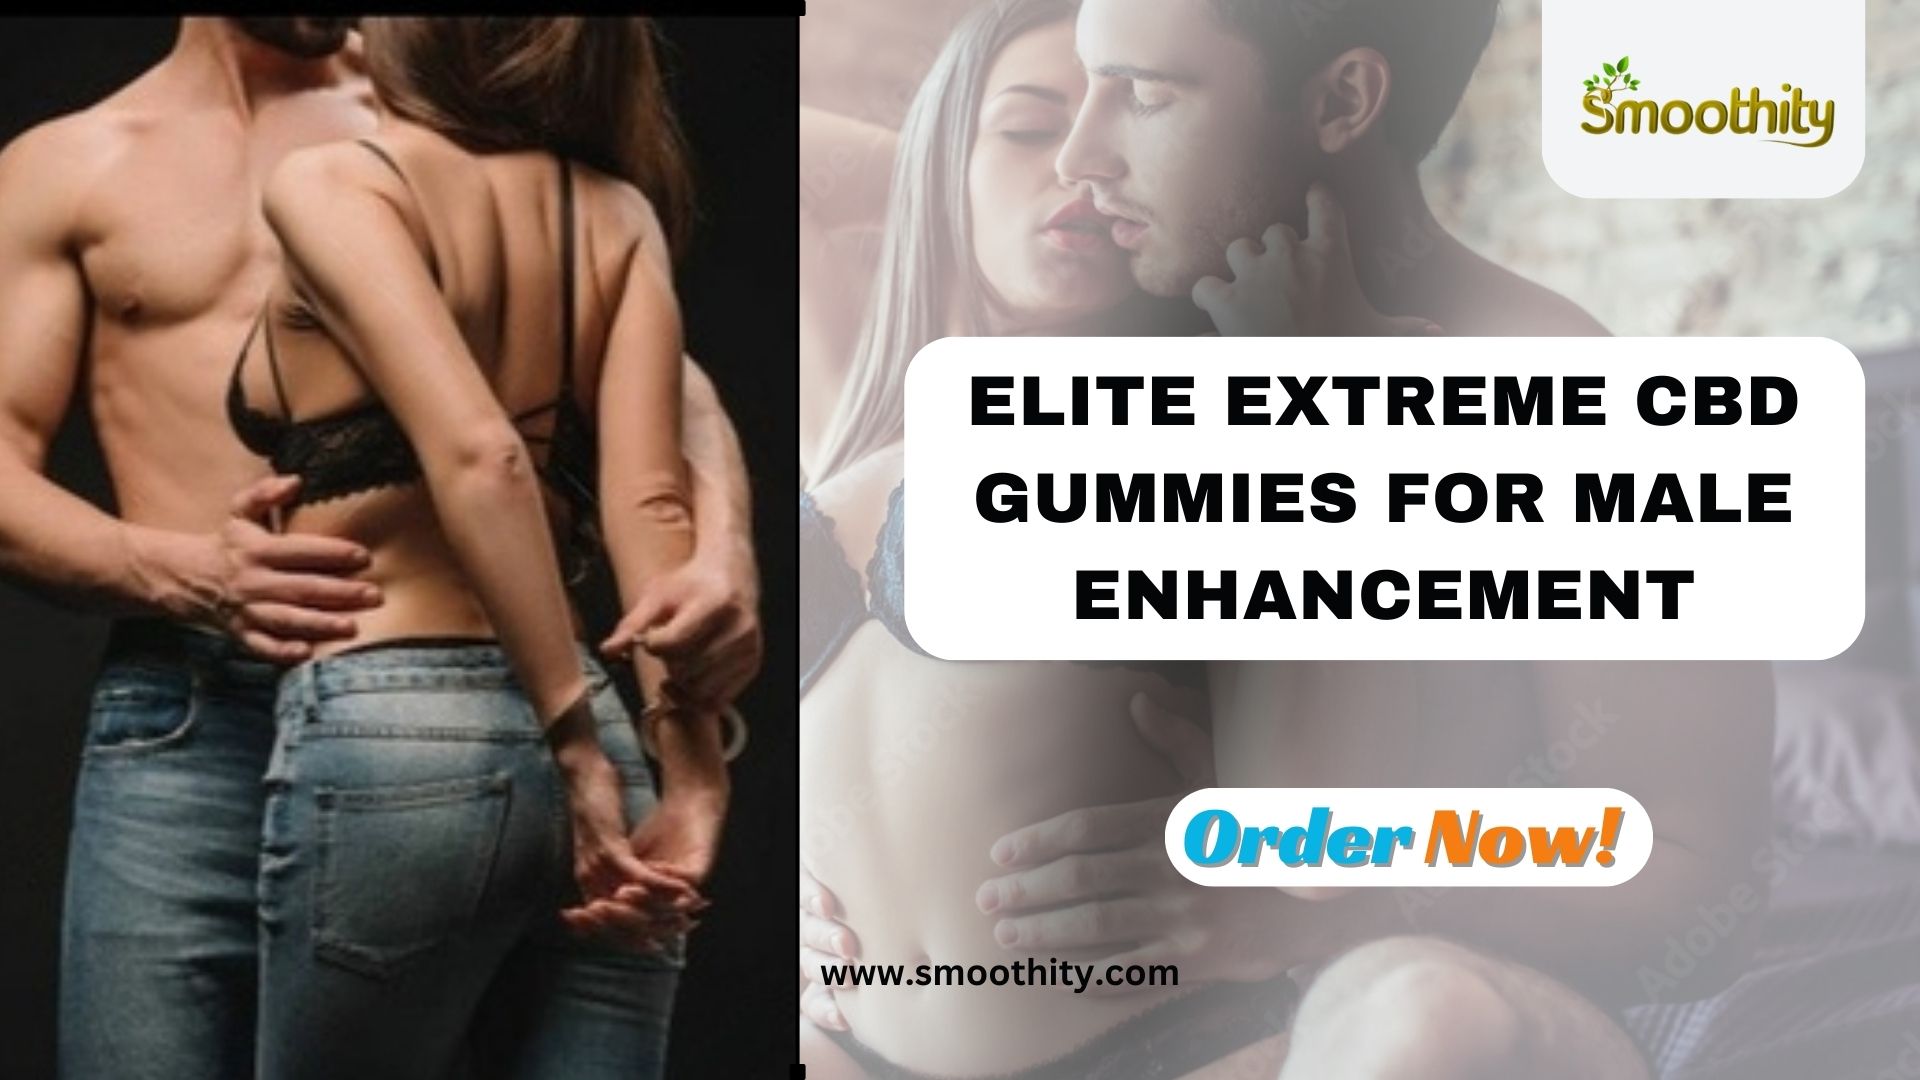 Elite Extreme CBD Gummies for Male Enhancement